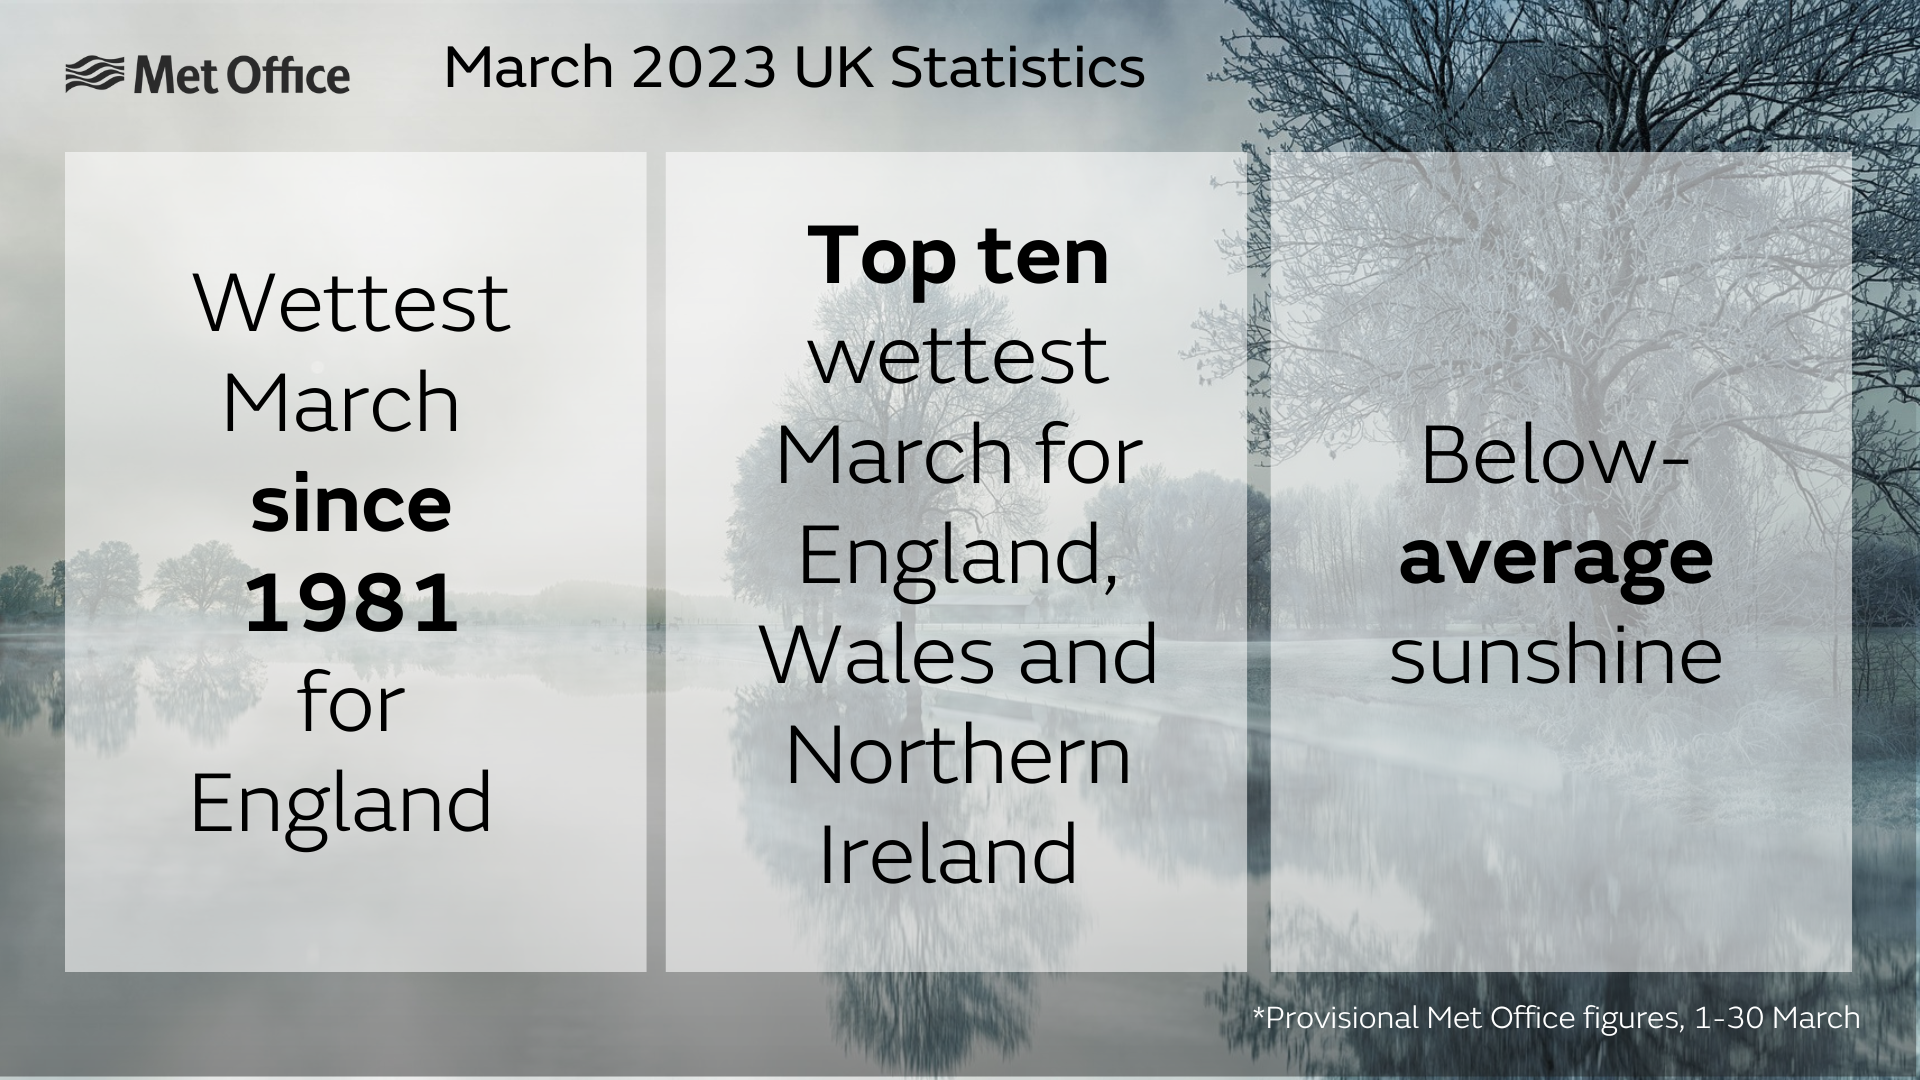 March 2023 UK Statistics - Wettest March since 1981 for ENgland. Top ten wettest March for England, Wales and Northern Ireland. Below-average sunshine.